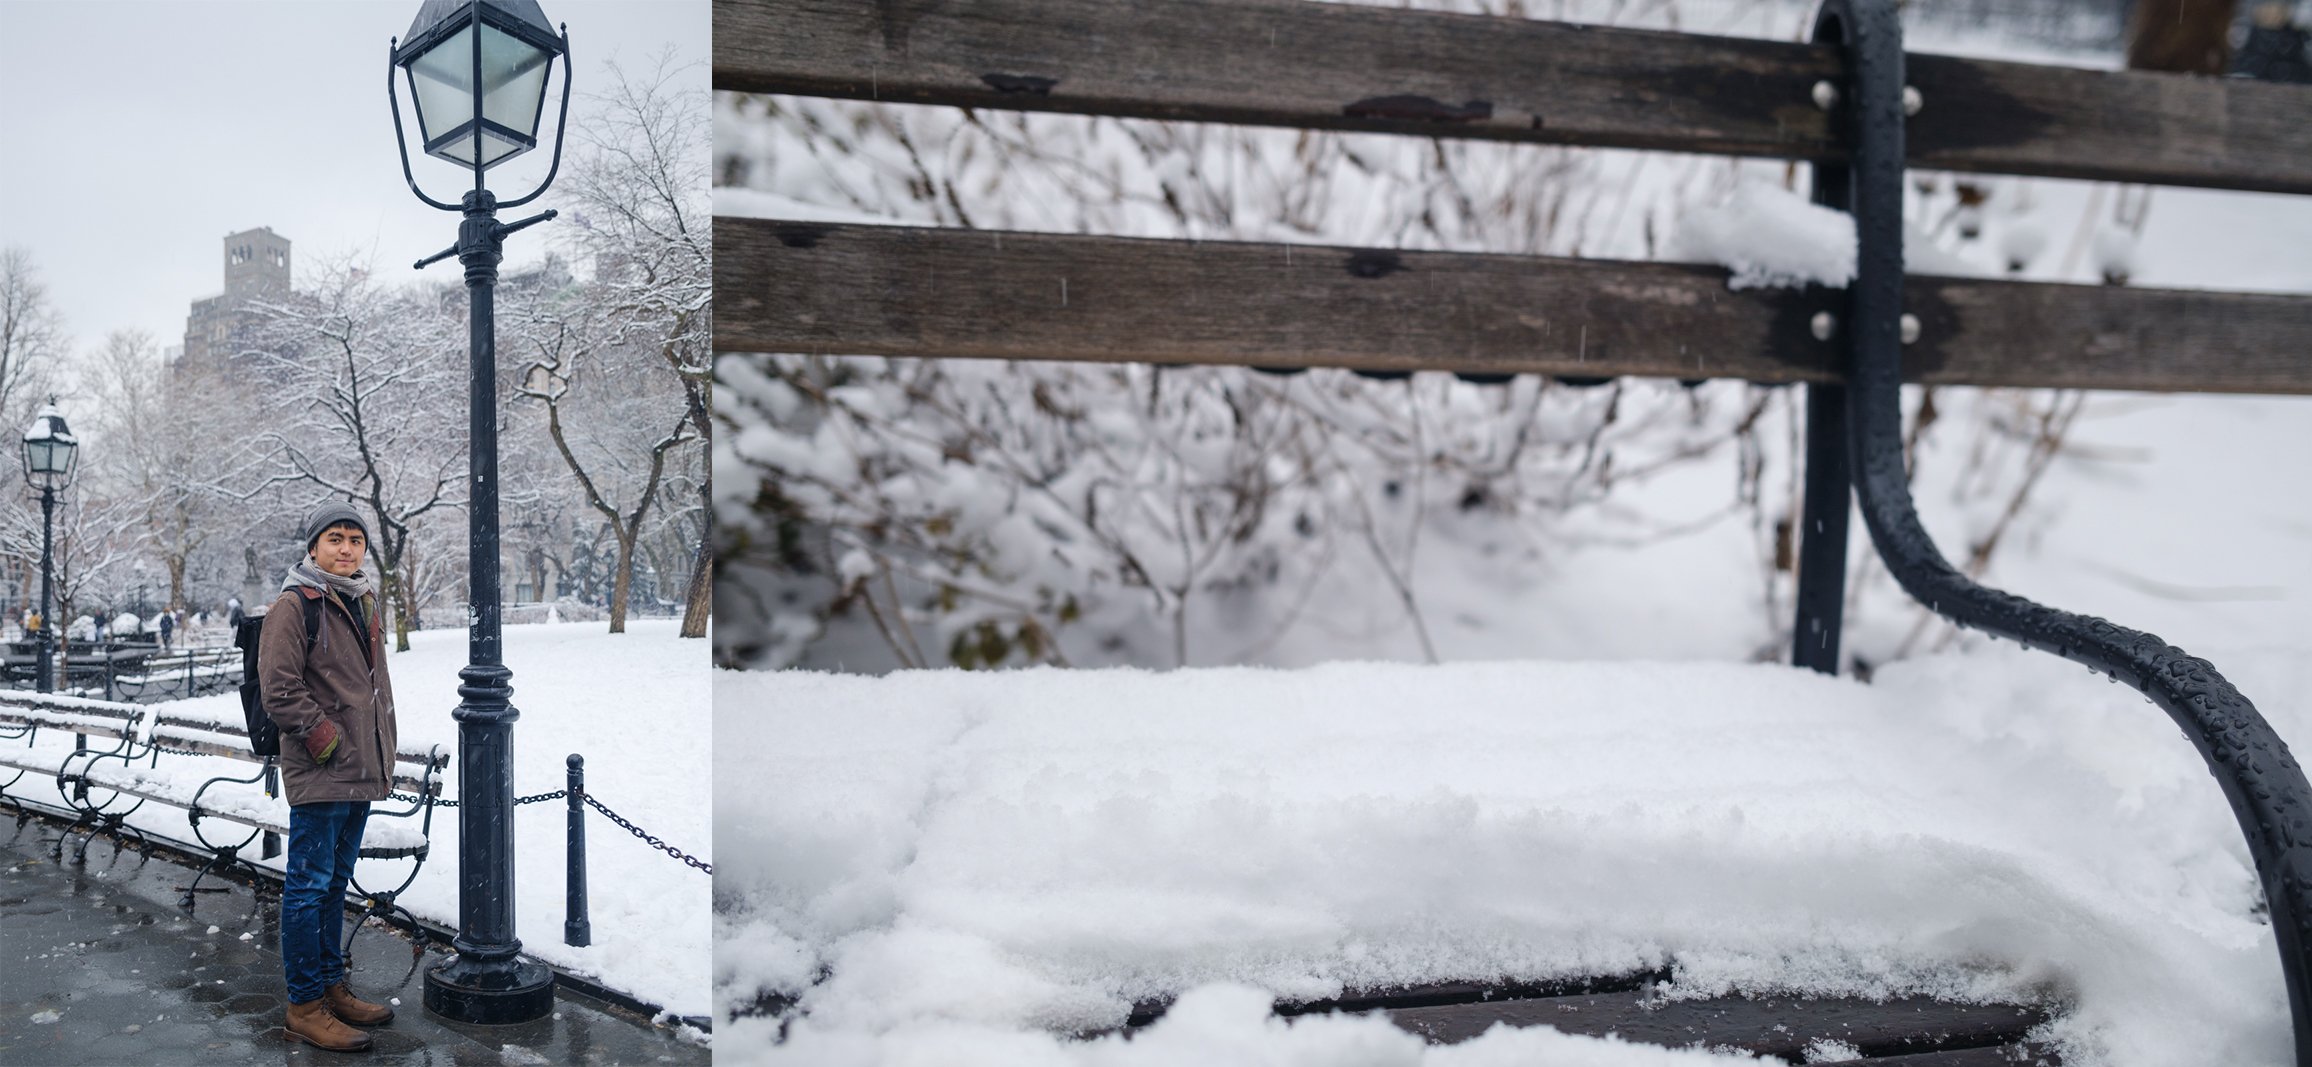 new-york-snow-central-park-sophia-liu-photography-1627xd.jpg